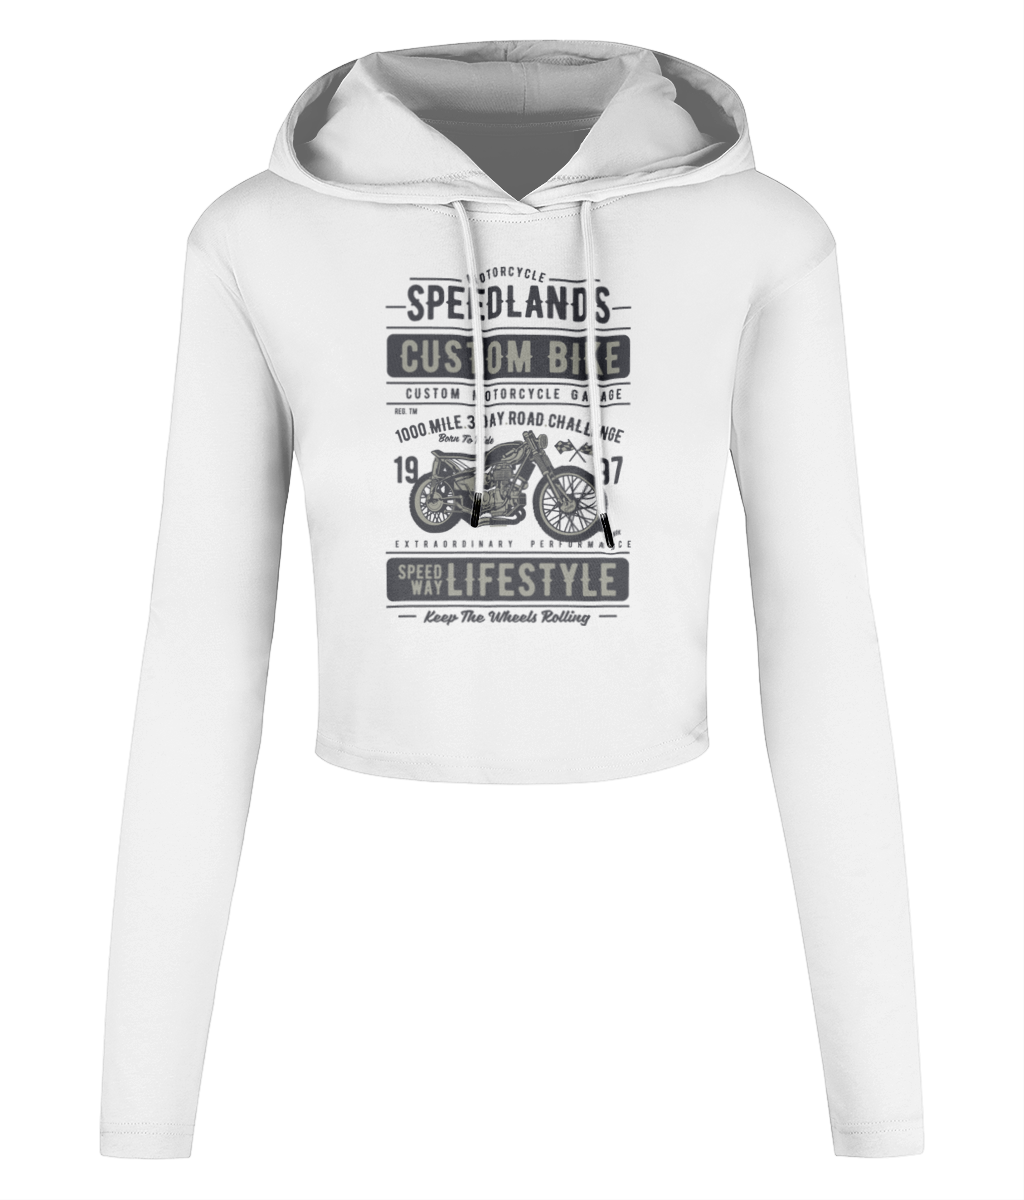 Speedlands Custom Bike – Women’s Cropped Hooded T-shirt